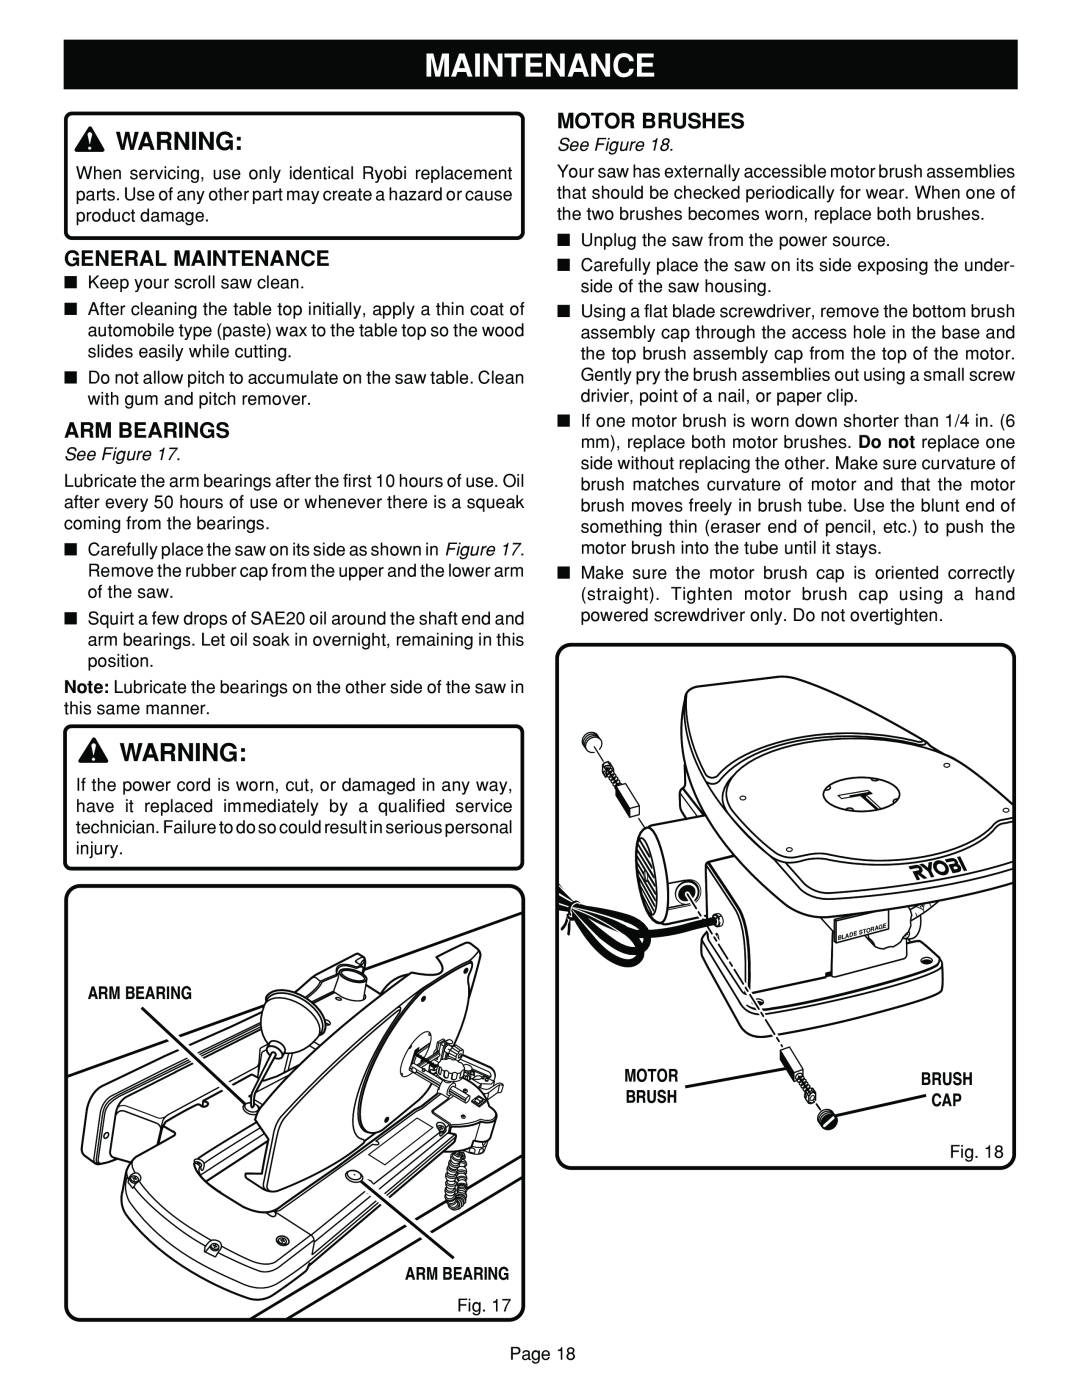 Ryobi SC180VS manual General Maintenance, Arm Bearings, Motor Brushes, See Figure 